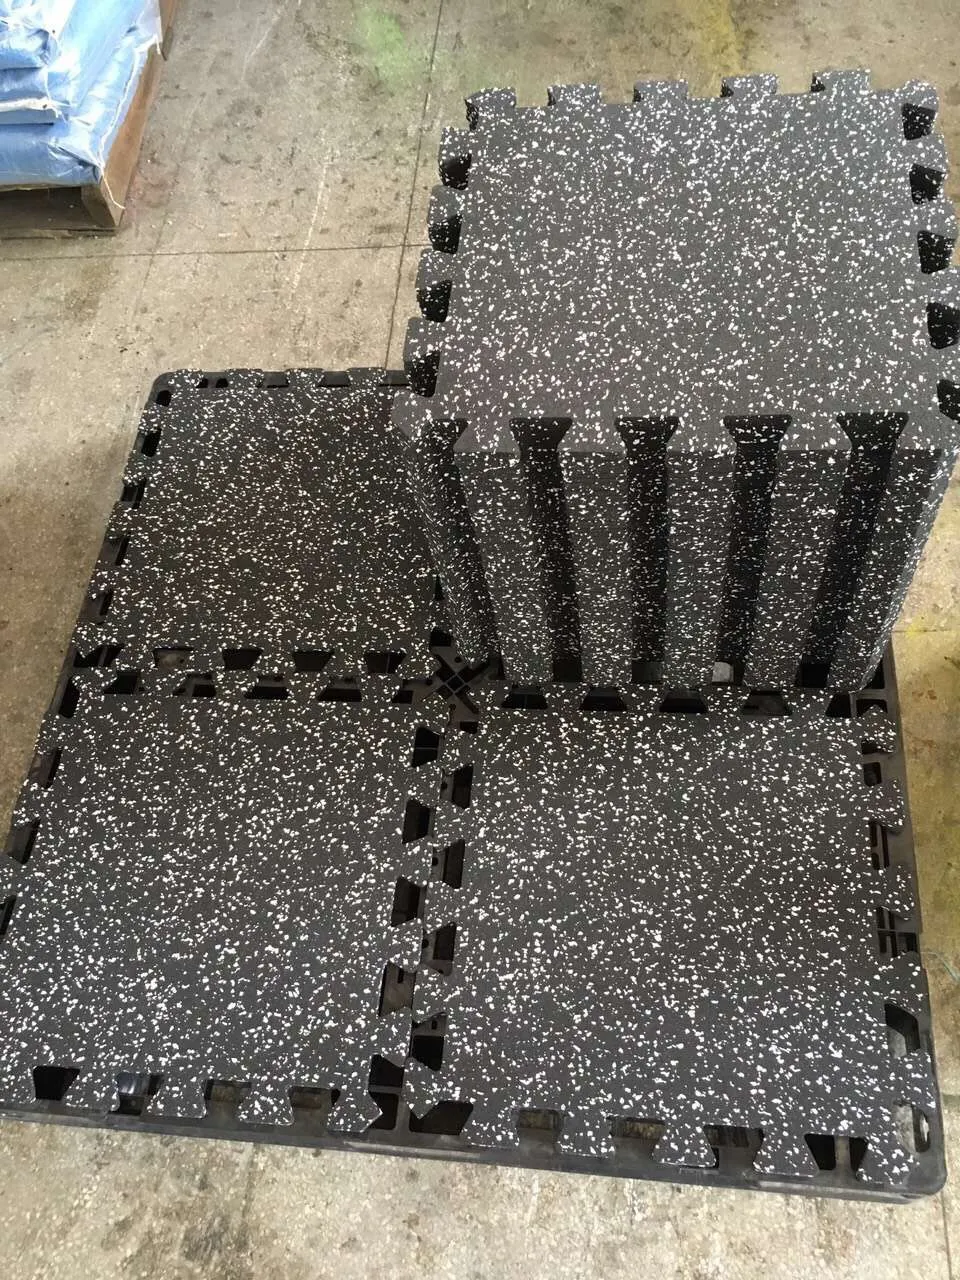 8mm/10mm Rubber Gym Flooring Tiles Rubber Mat for Gym